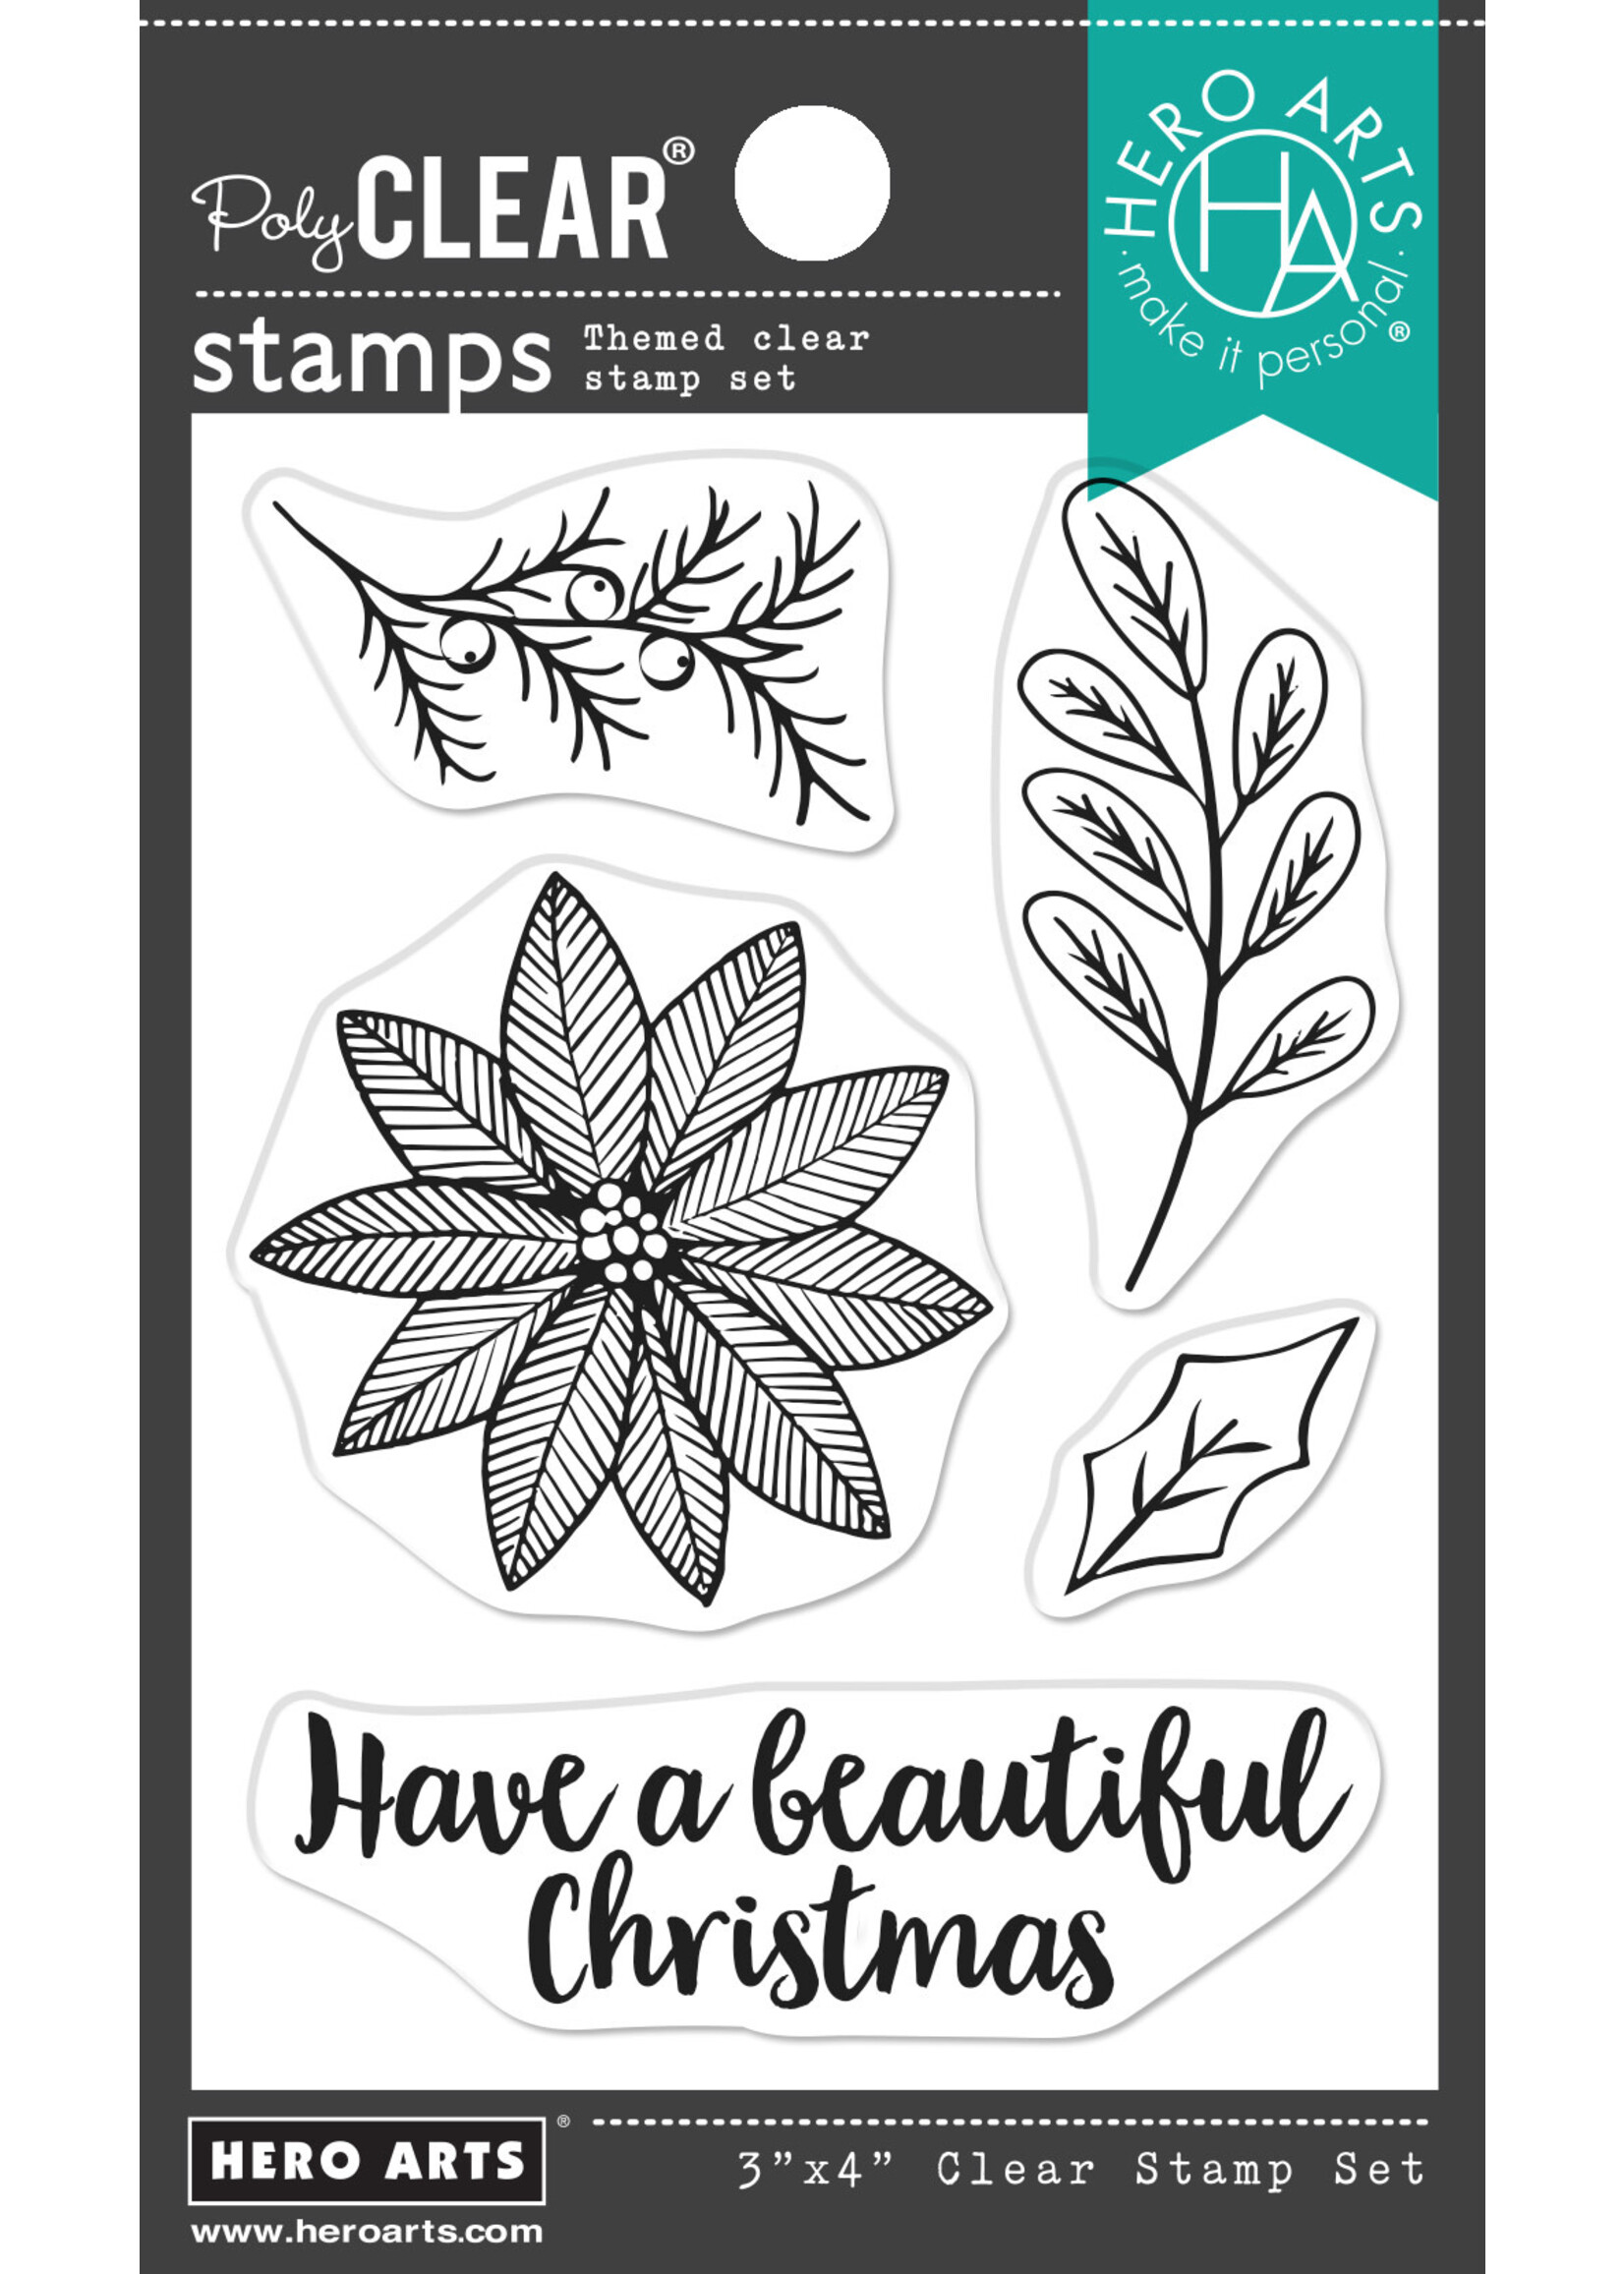 HERO ARTS Poinsettia Arrangement Stamp